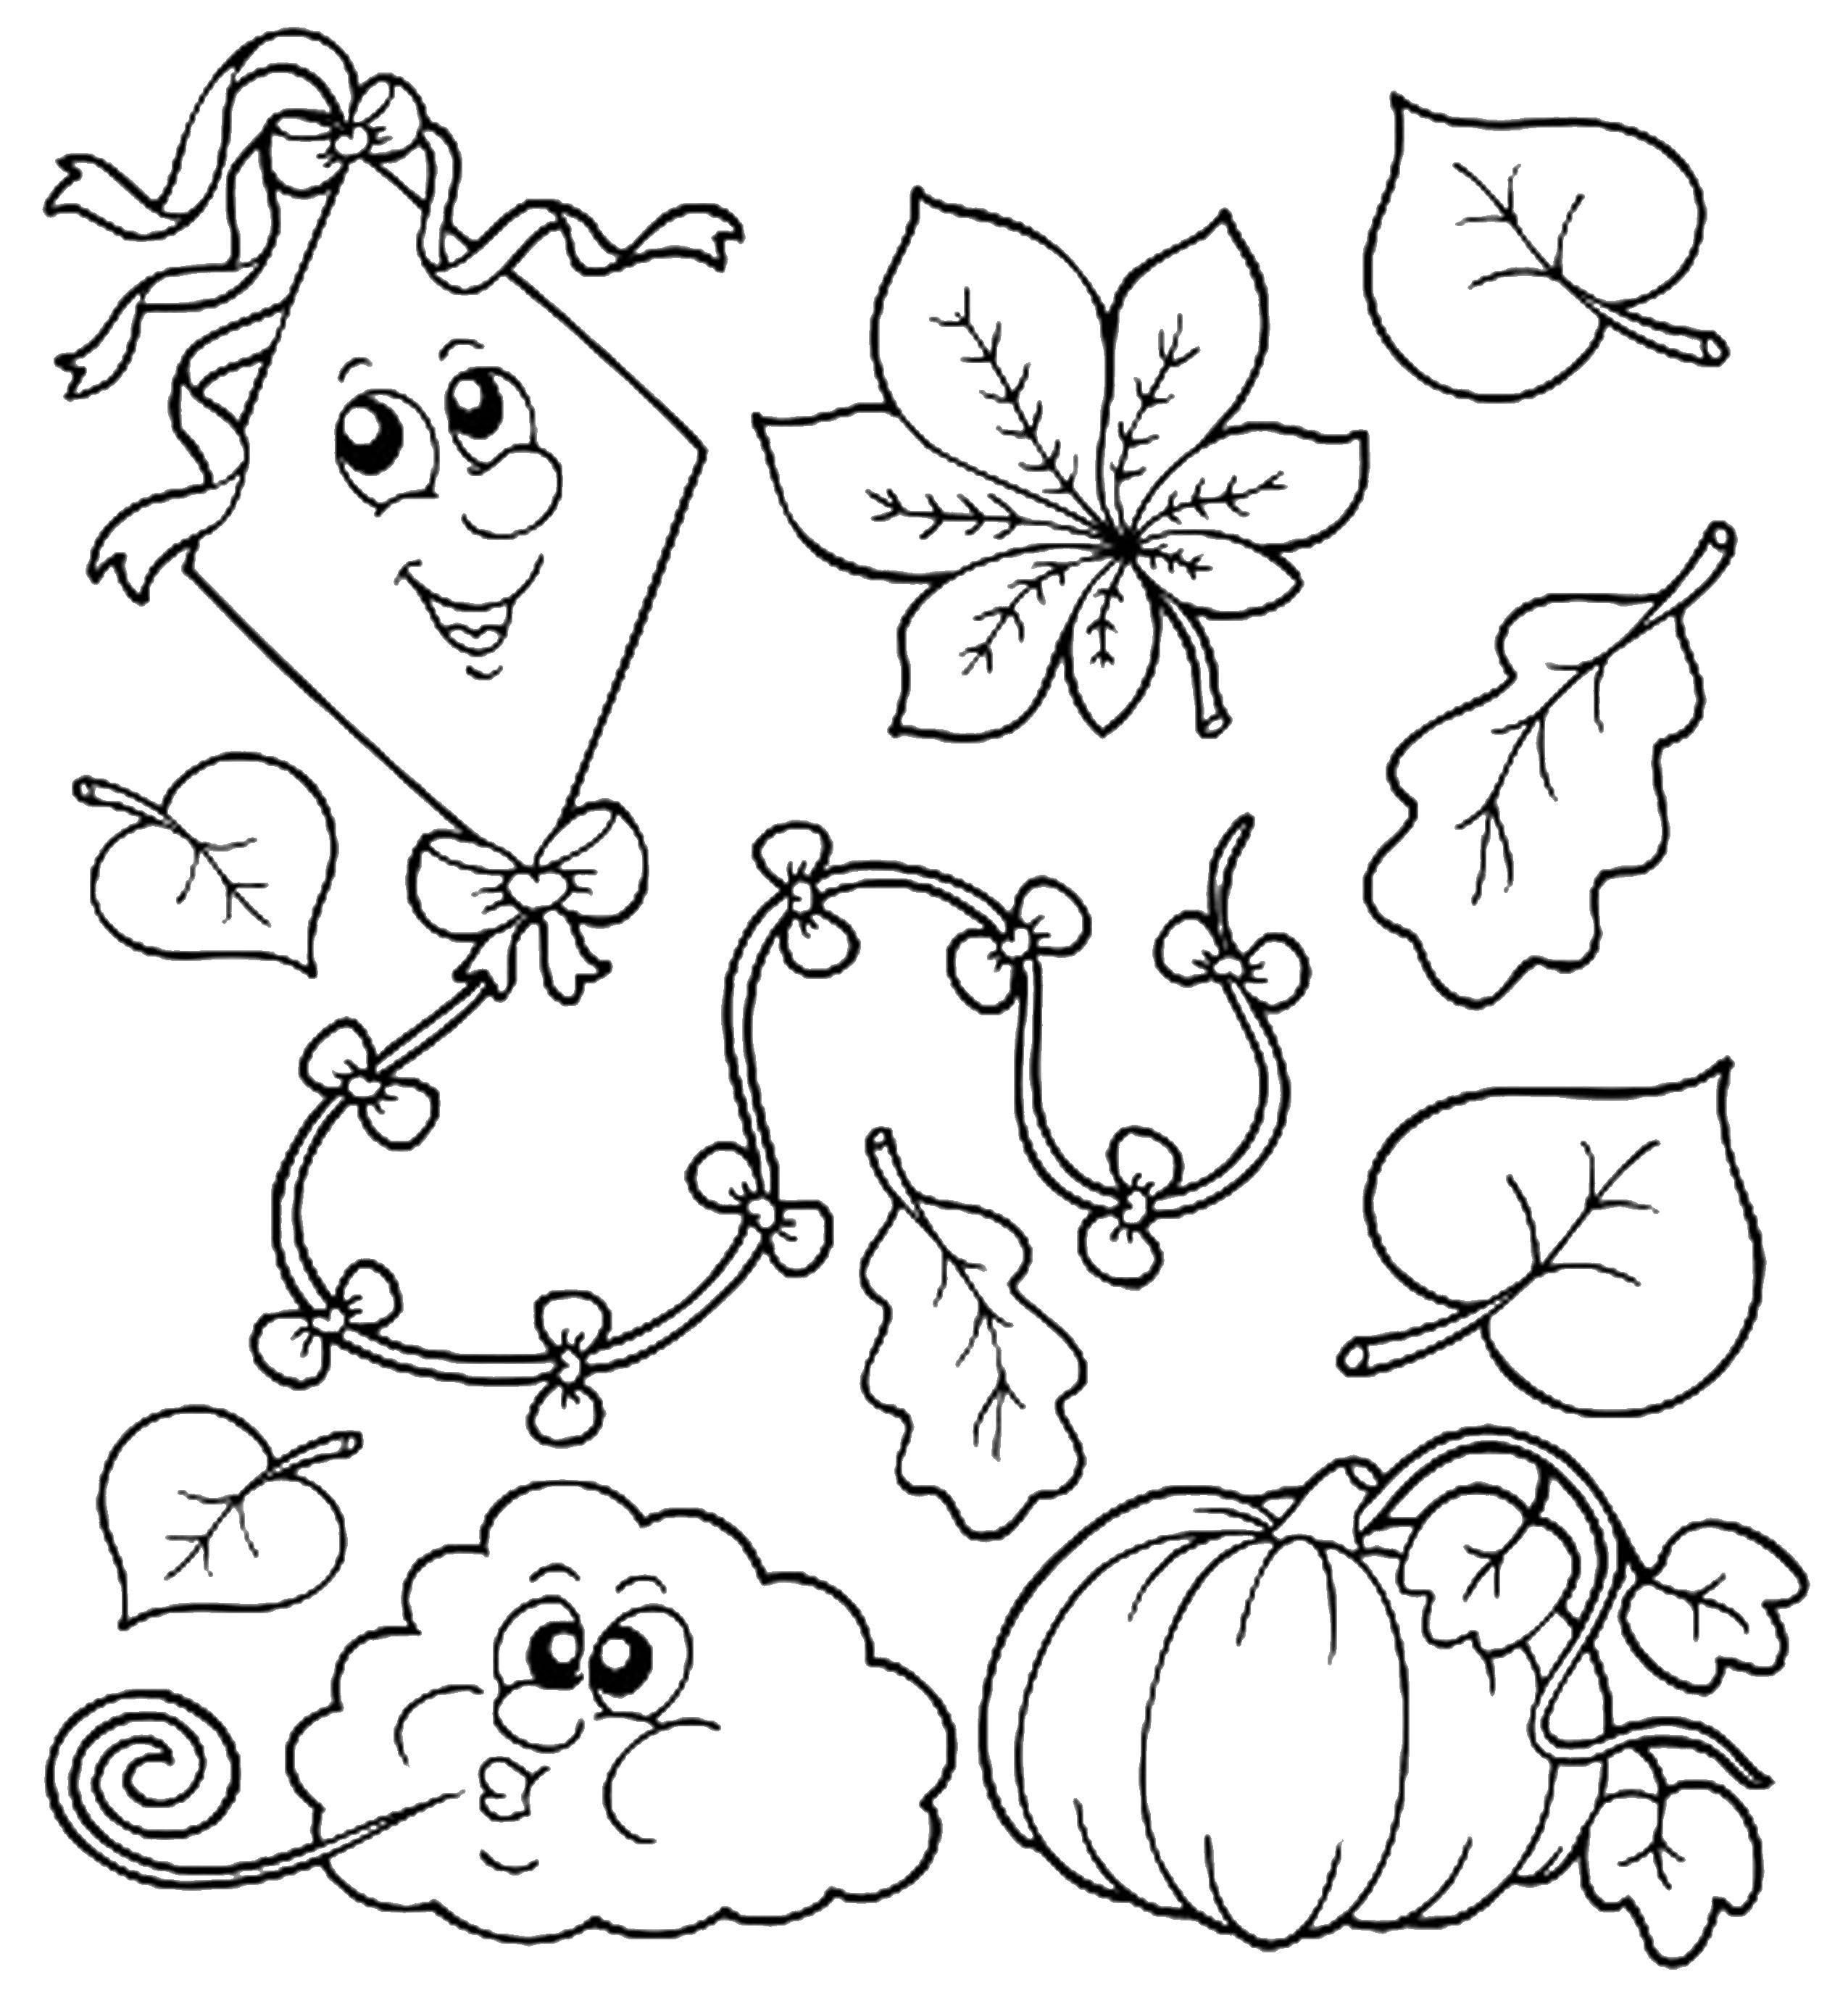 Coloring Leaves, a kite, pumpkin, cloud. Category Autumn. Tags:  autumn, leaves, pumpkin, kite.